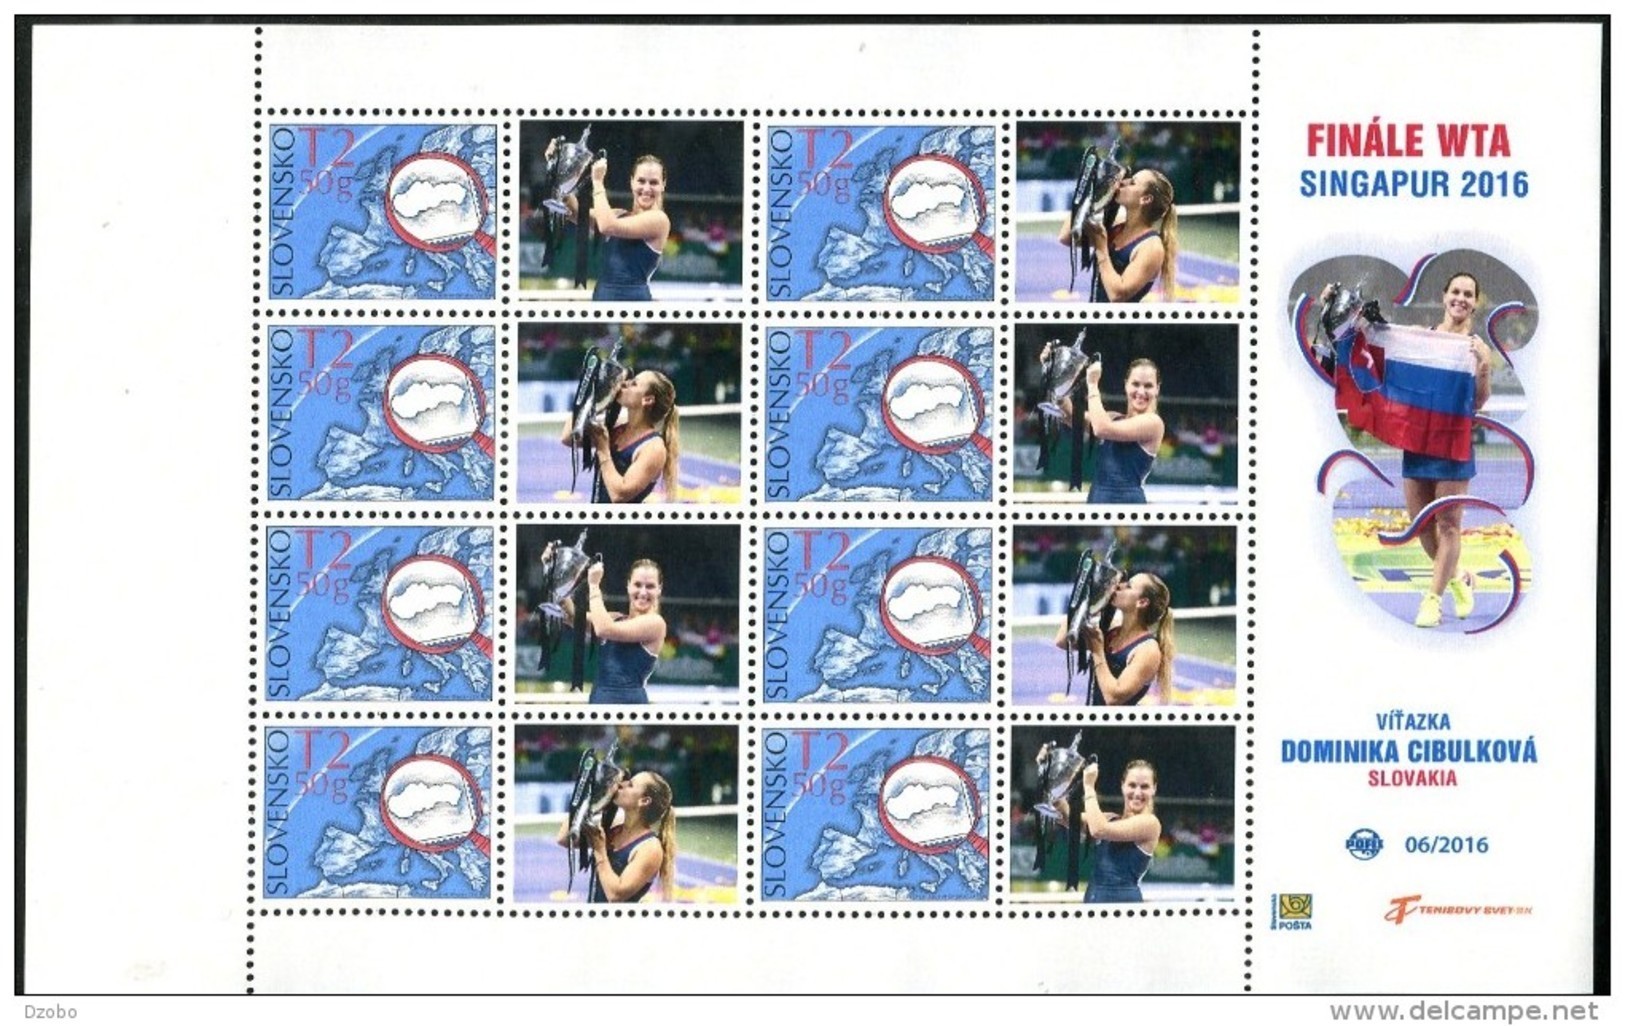 202 SLOVAKIA Dominika CIBULKOVA Women's  Tennis Winner WTA Singapoure 2016 Stamp With A Personalized Coupon - Blocks & Sheetlets